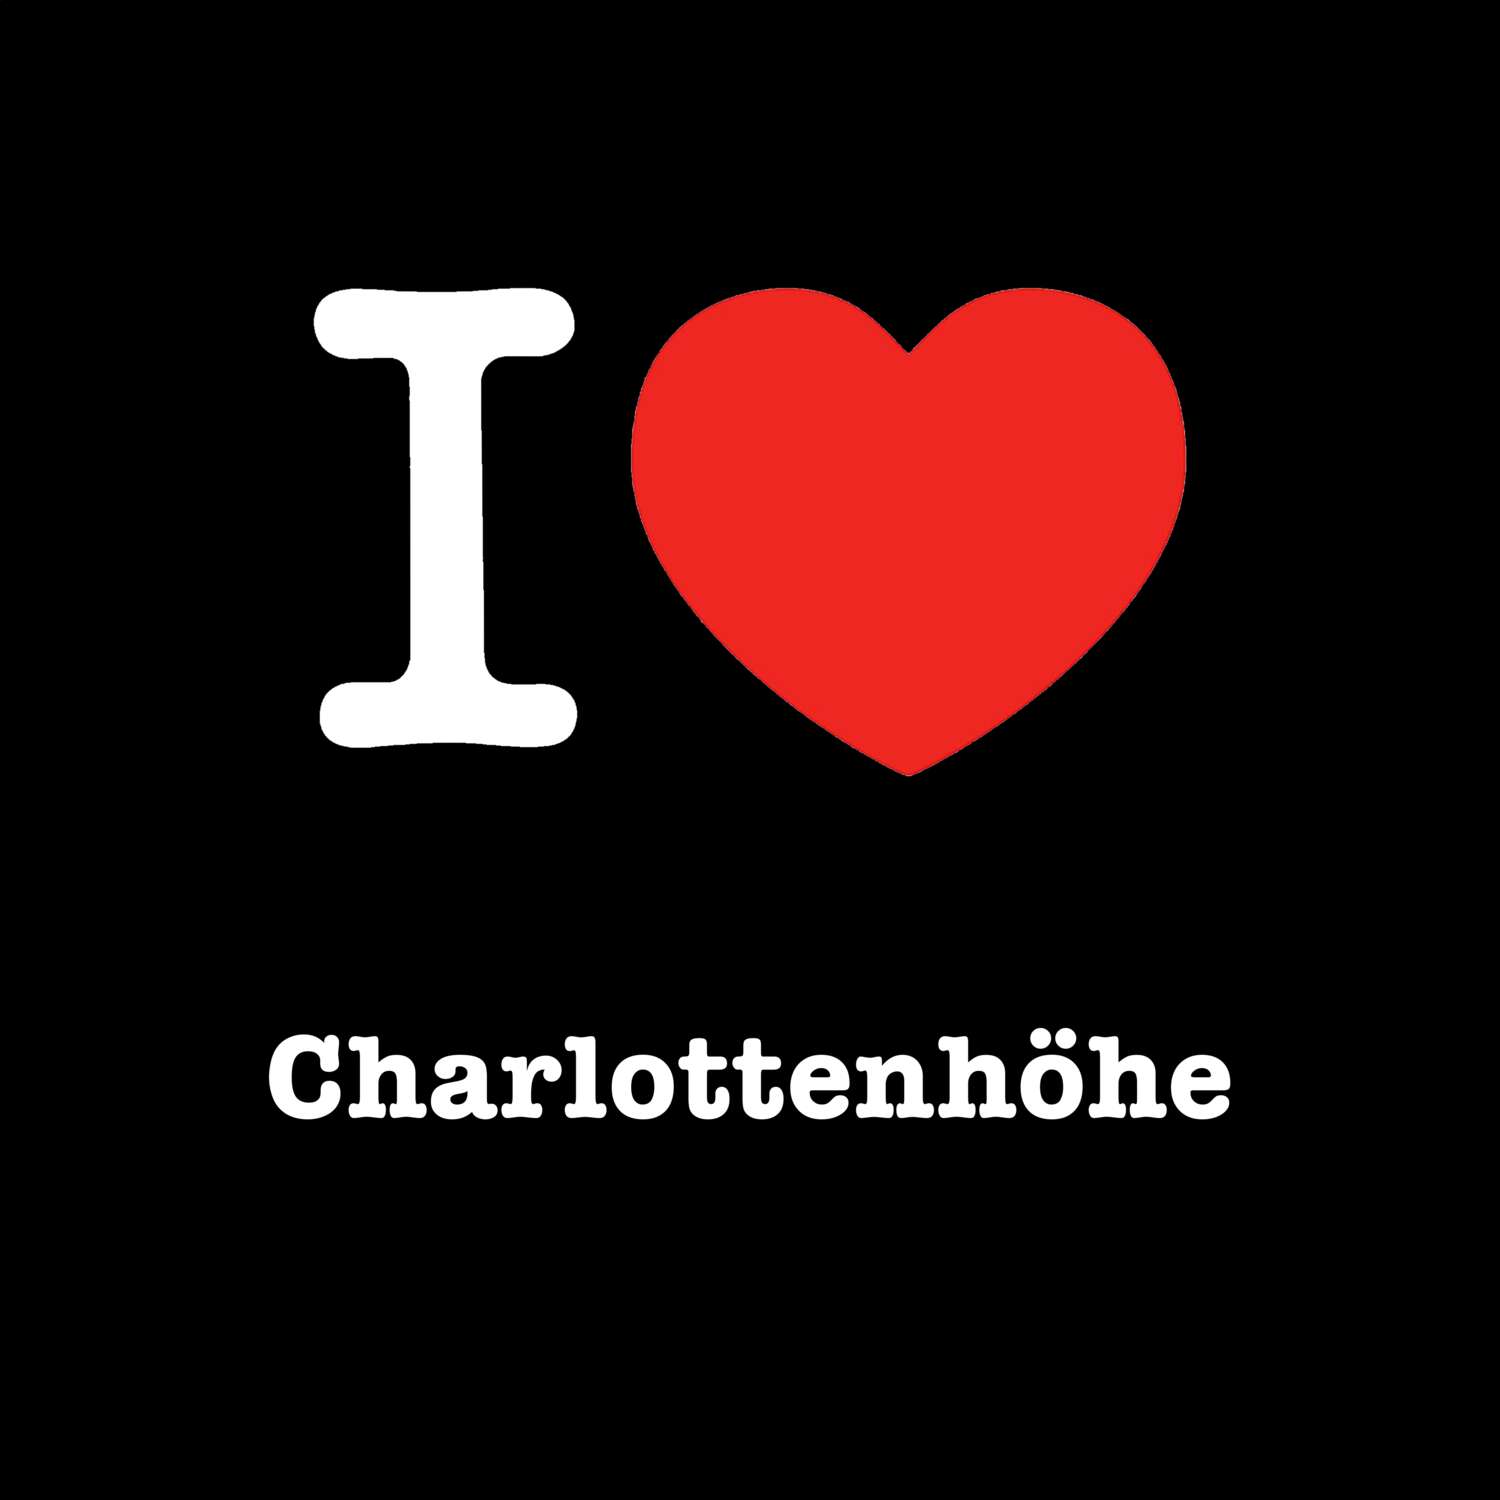 Charlottenhöhe T-Shirt »I love«